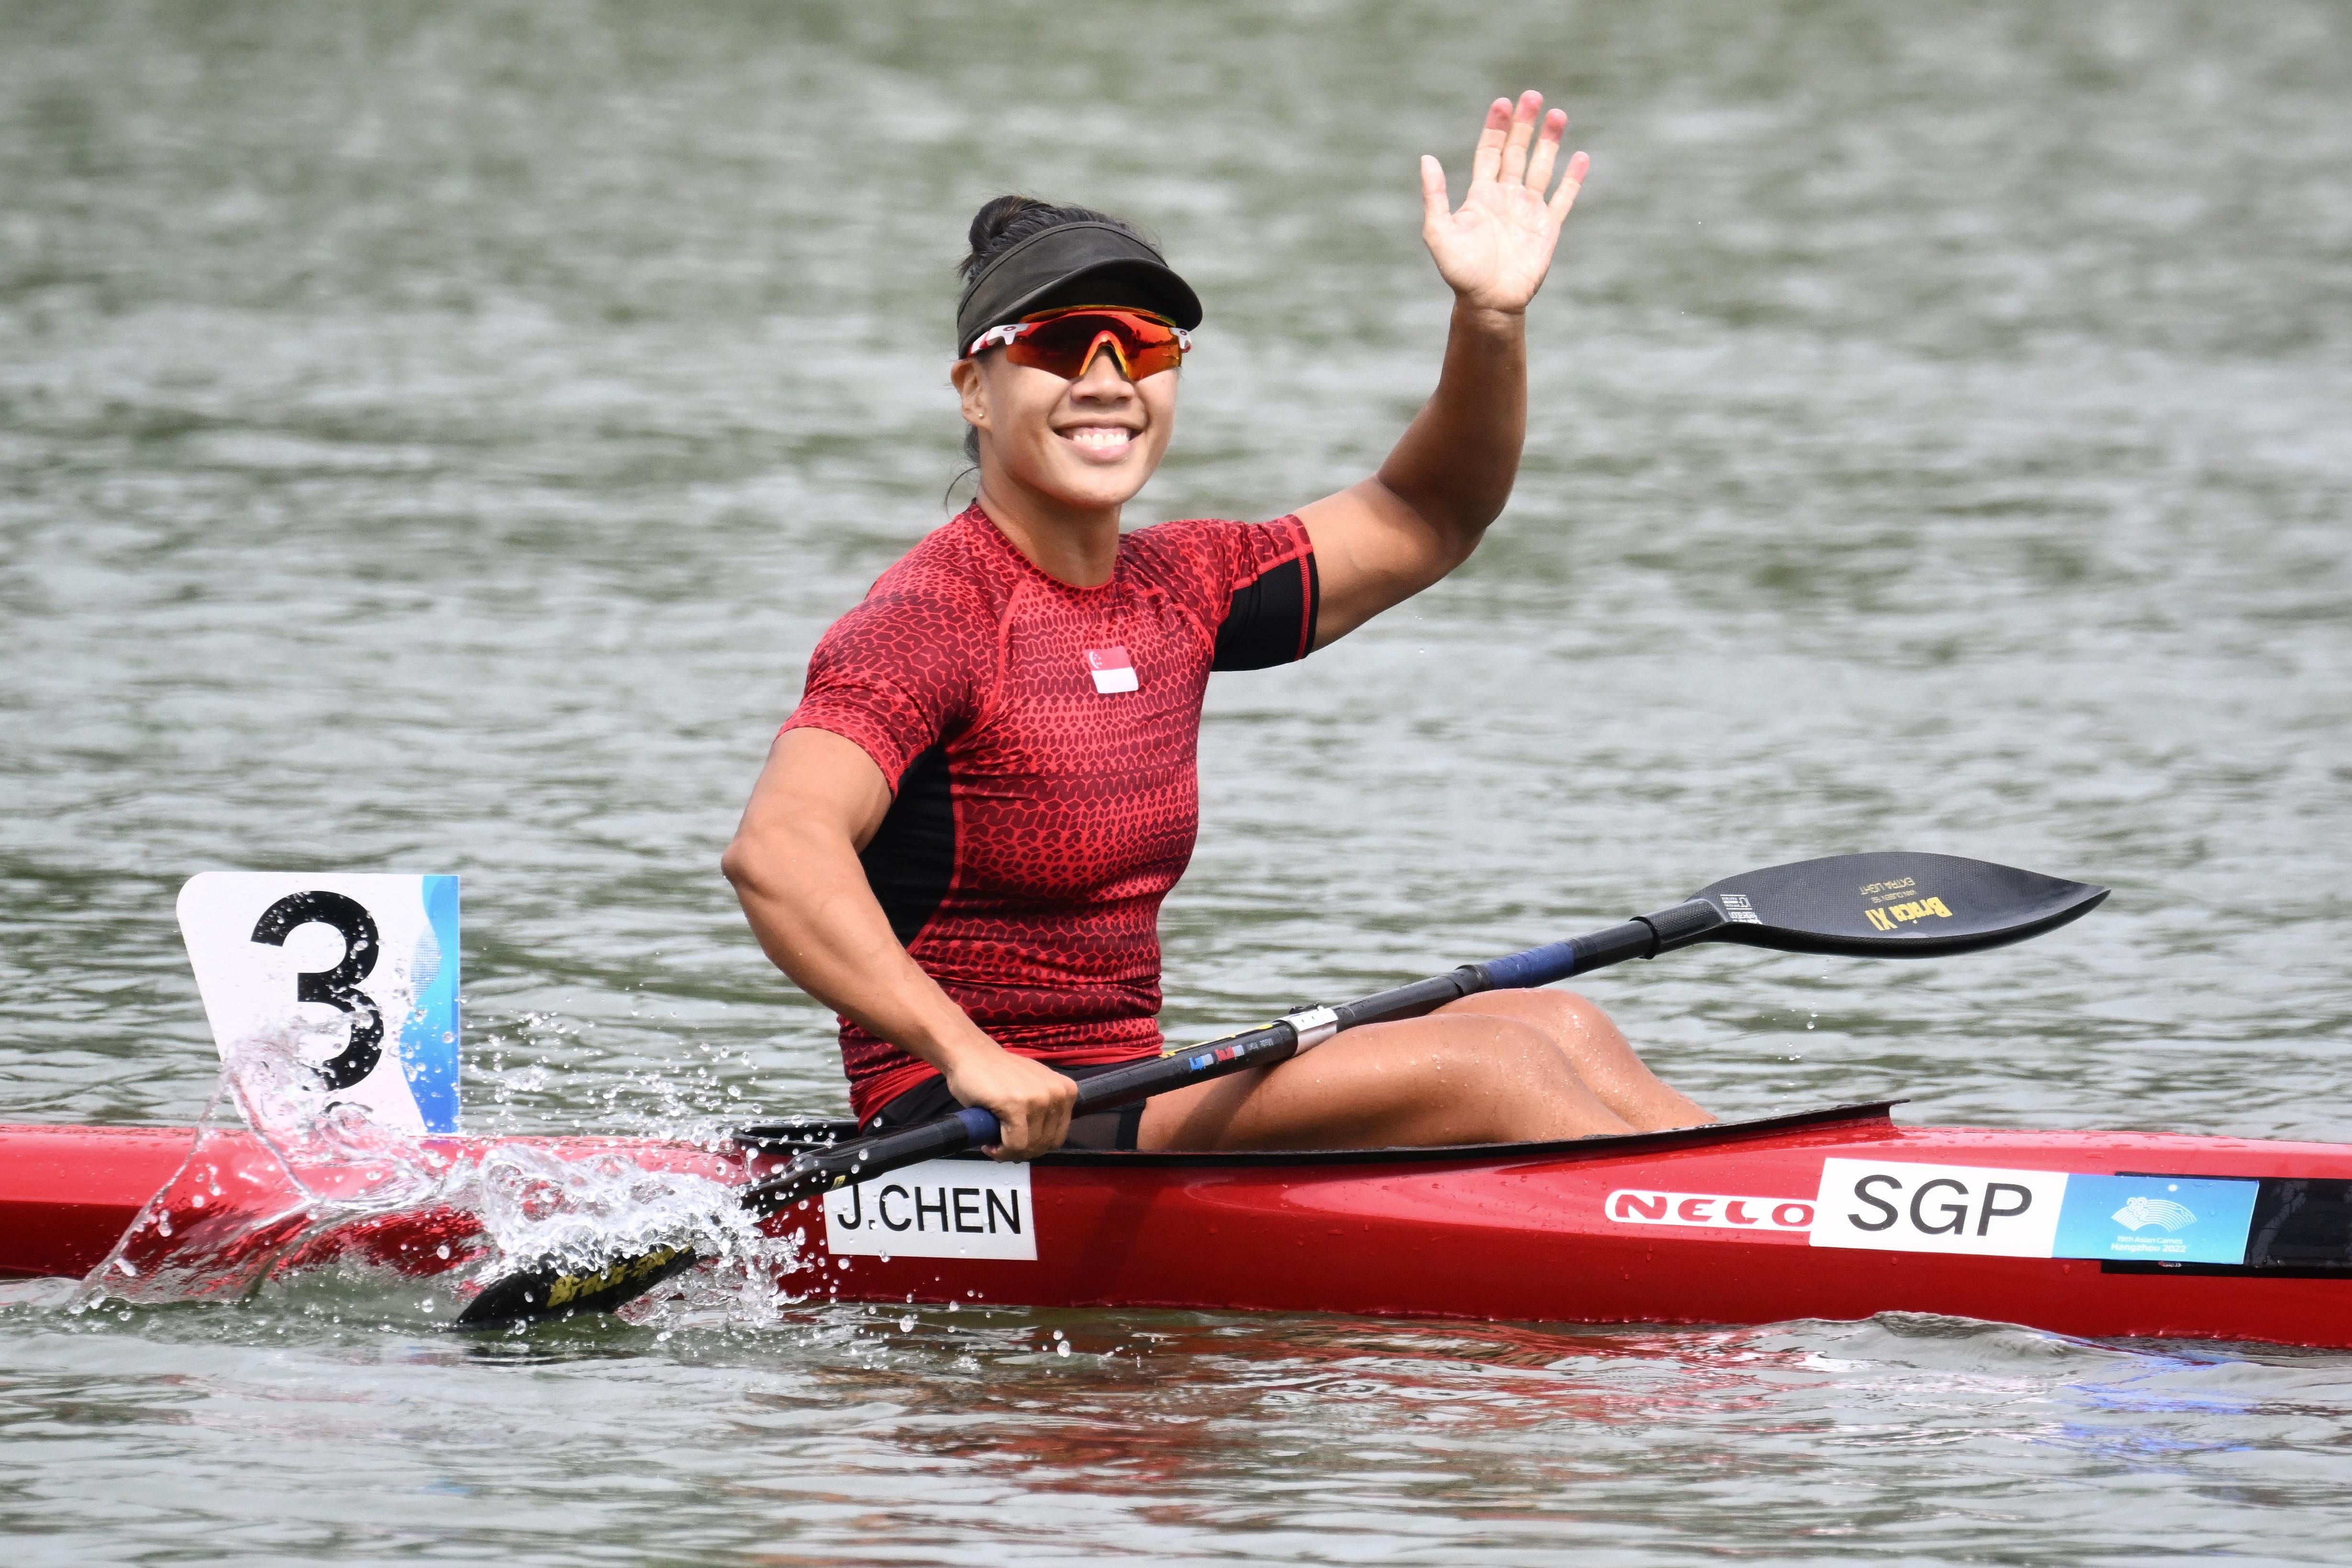 Singapore kayaker Stephenie Chen qualifies for Paris Olympics